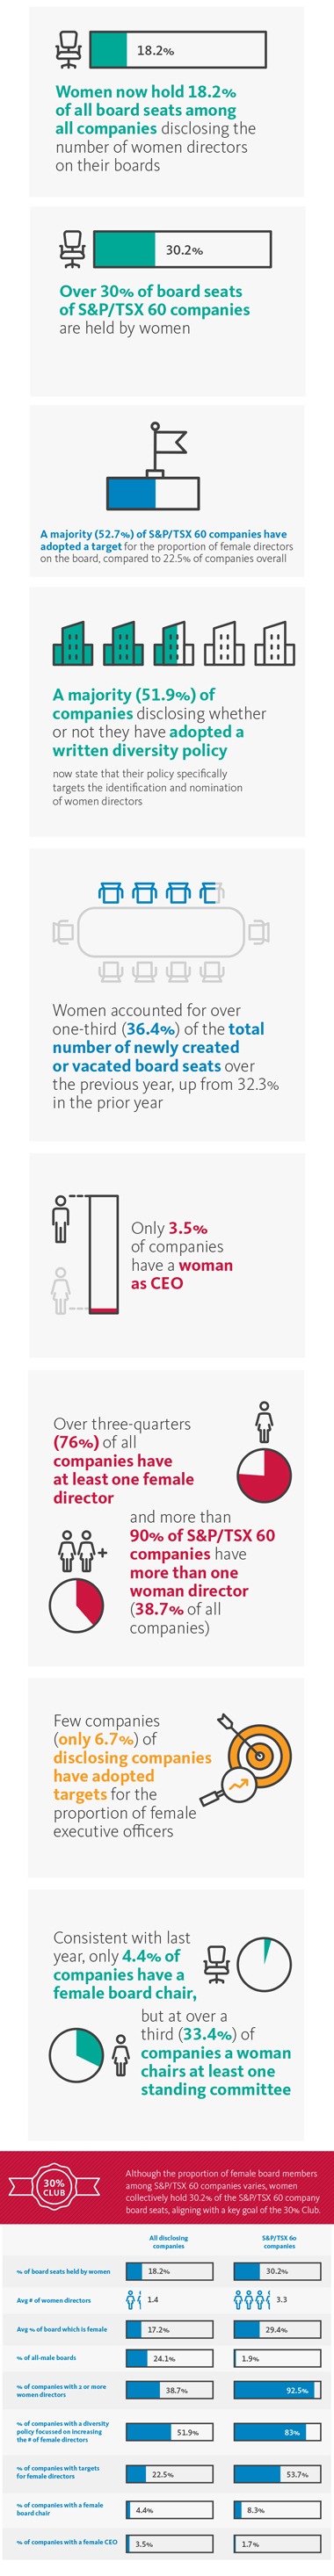 Gender diversity in corporate leadership in Canada